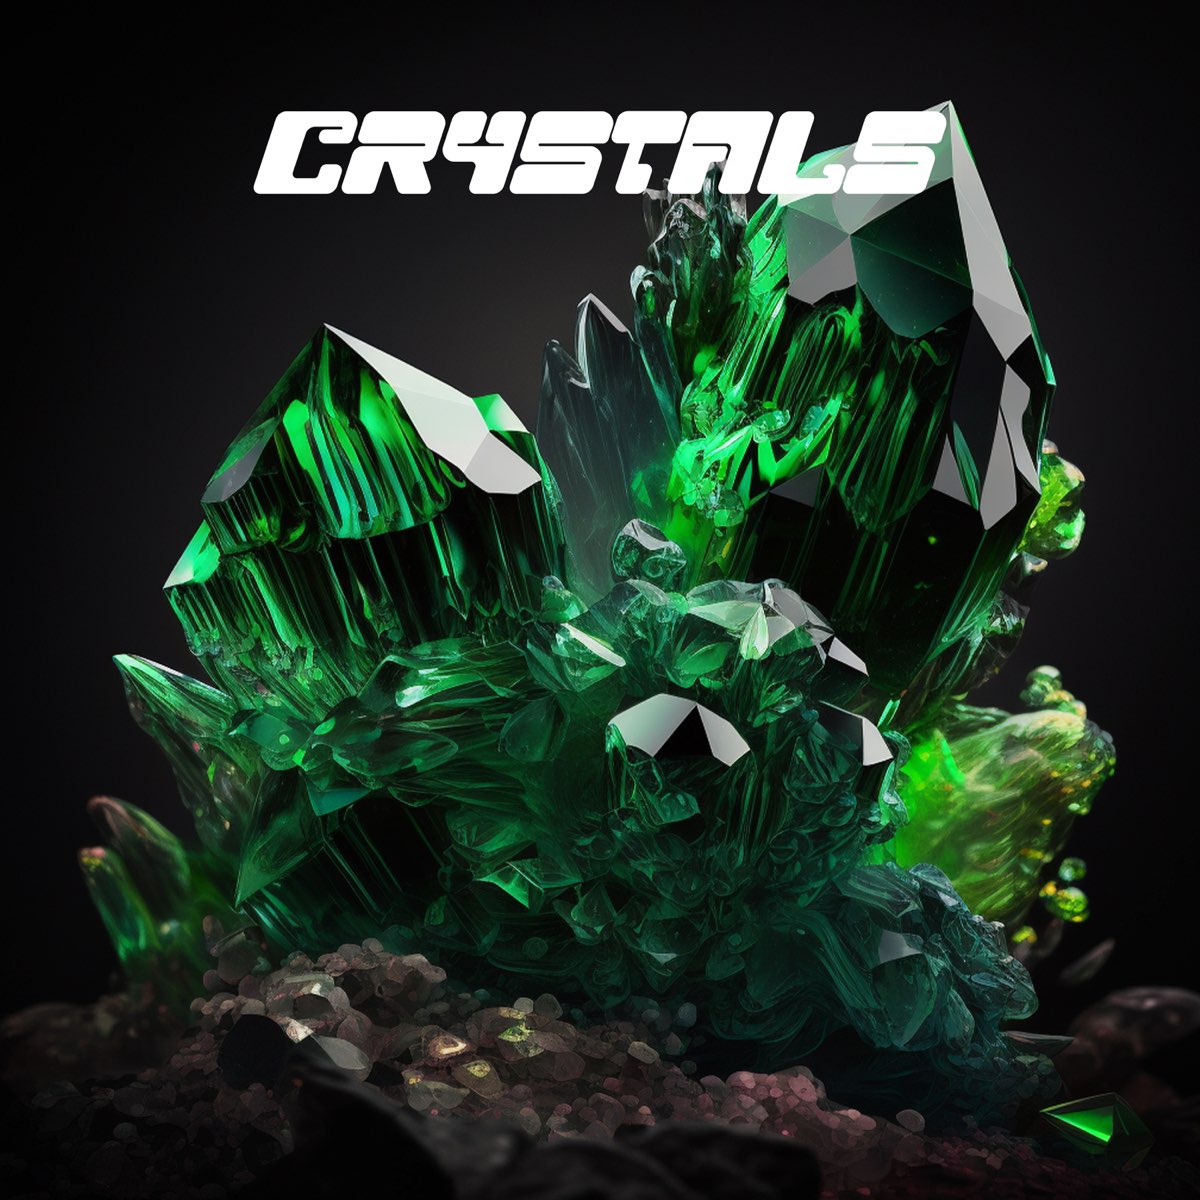 Isolate exe crystals reverb. Crystals (Slowed) от pr1svx. Pr1svx Crystals обложка. Песня Crystals Slowed pr1svx. Isolate.exe - Crystals (Slowed € Reverb).